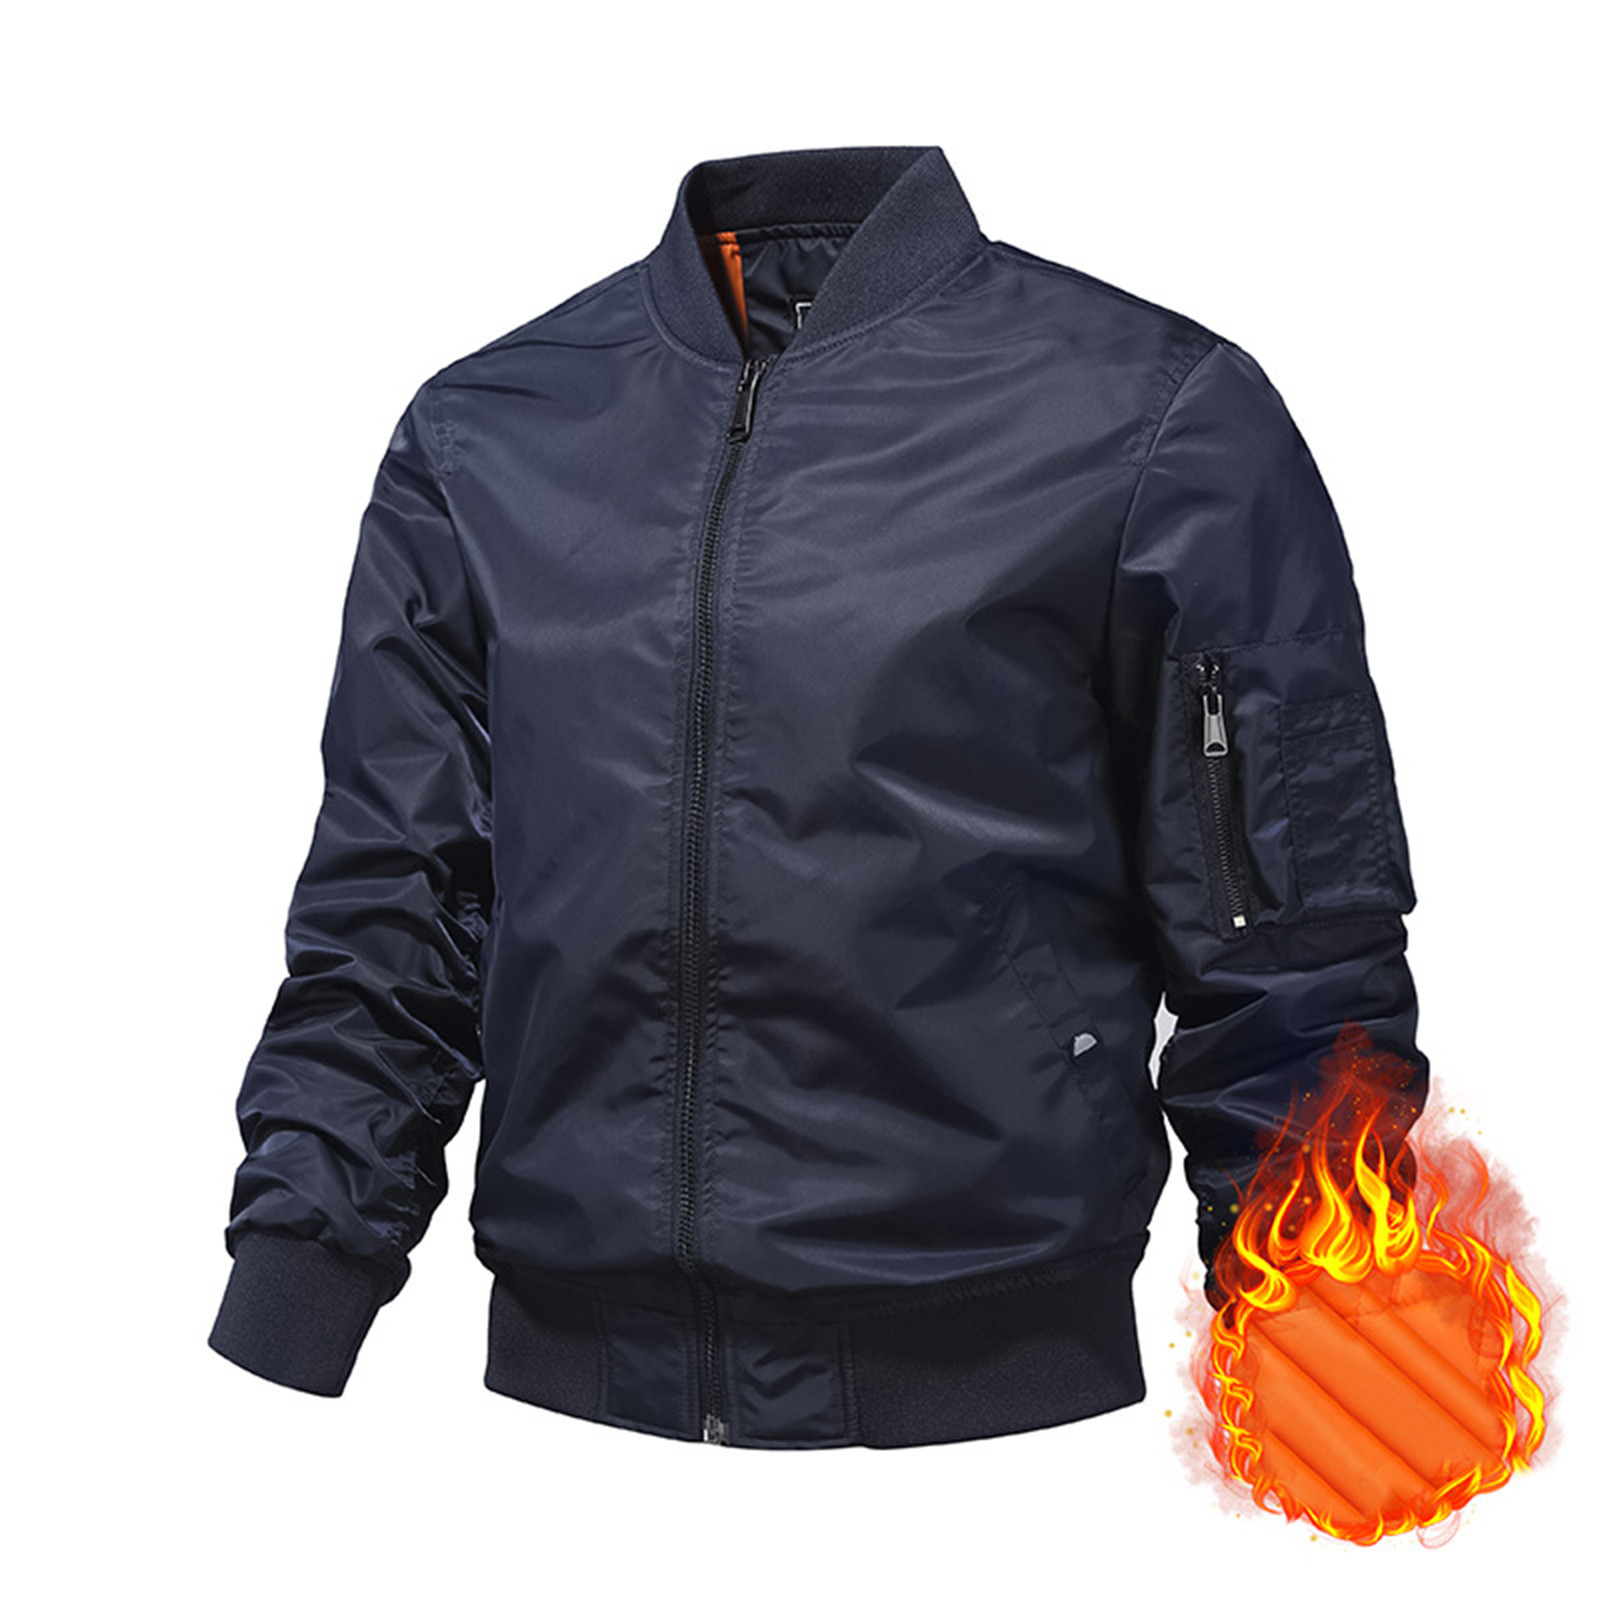 LEEy-world Mens Leather Jacket Men's Jackets Windbreaker Bomber Jackets Pockets Lightweight Spring Fall Varsity Baseball Jacket Blue,M - image 3 of 4